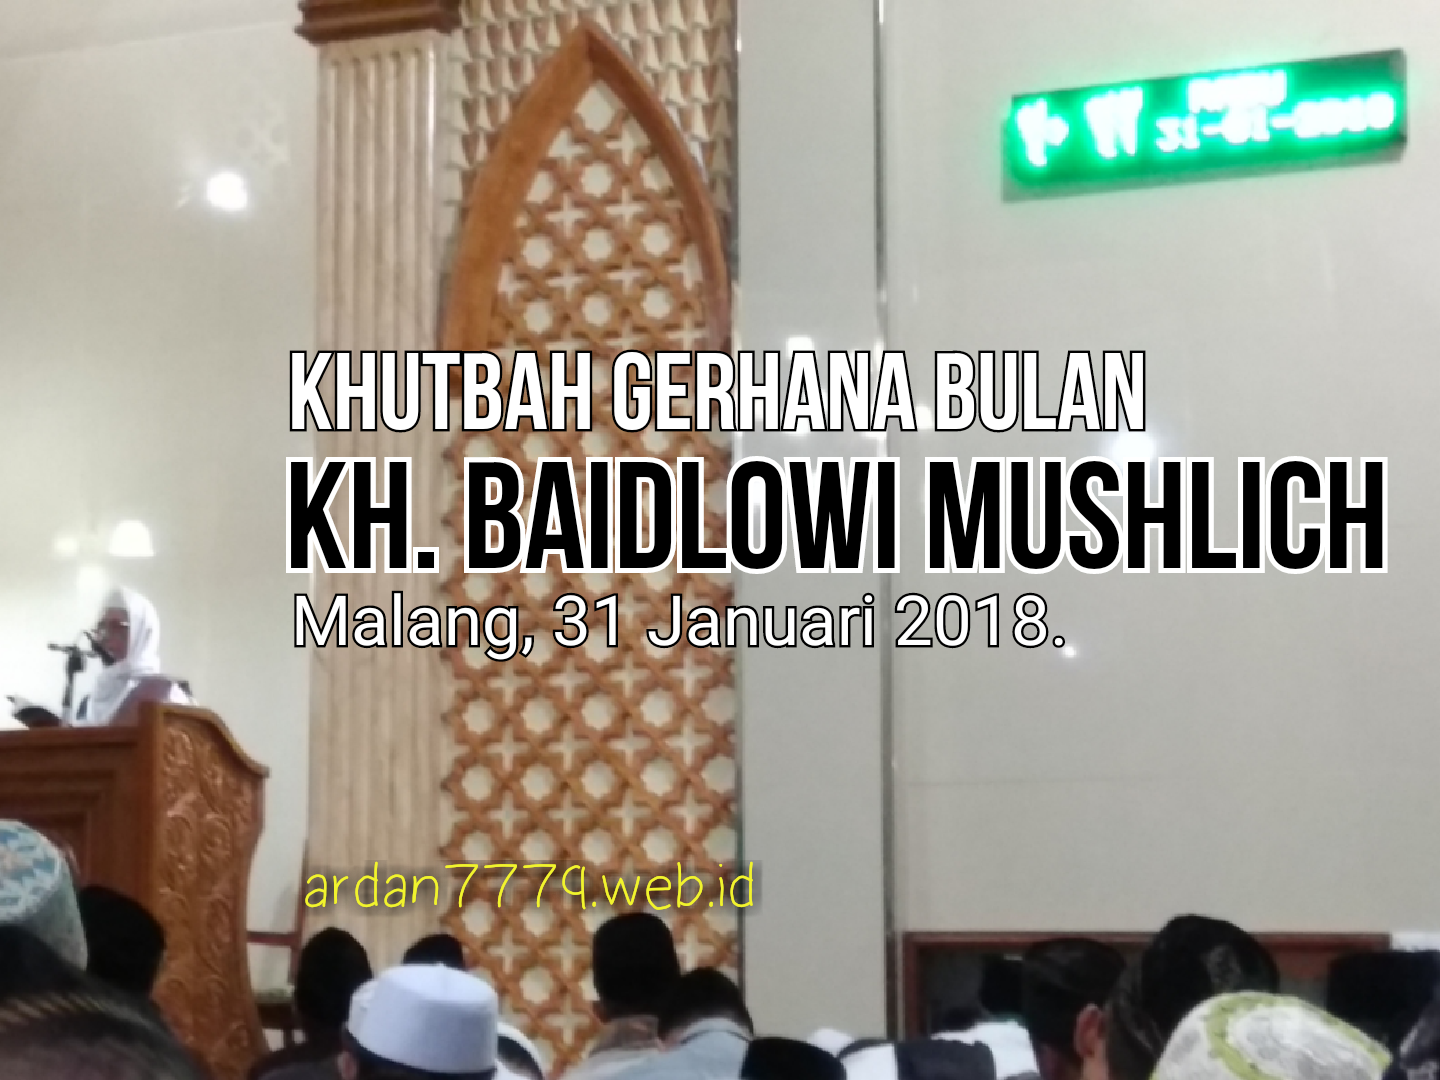 Khutbah Gerhana Bulan KH Baidloi Muslich di Malang